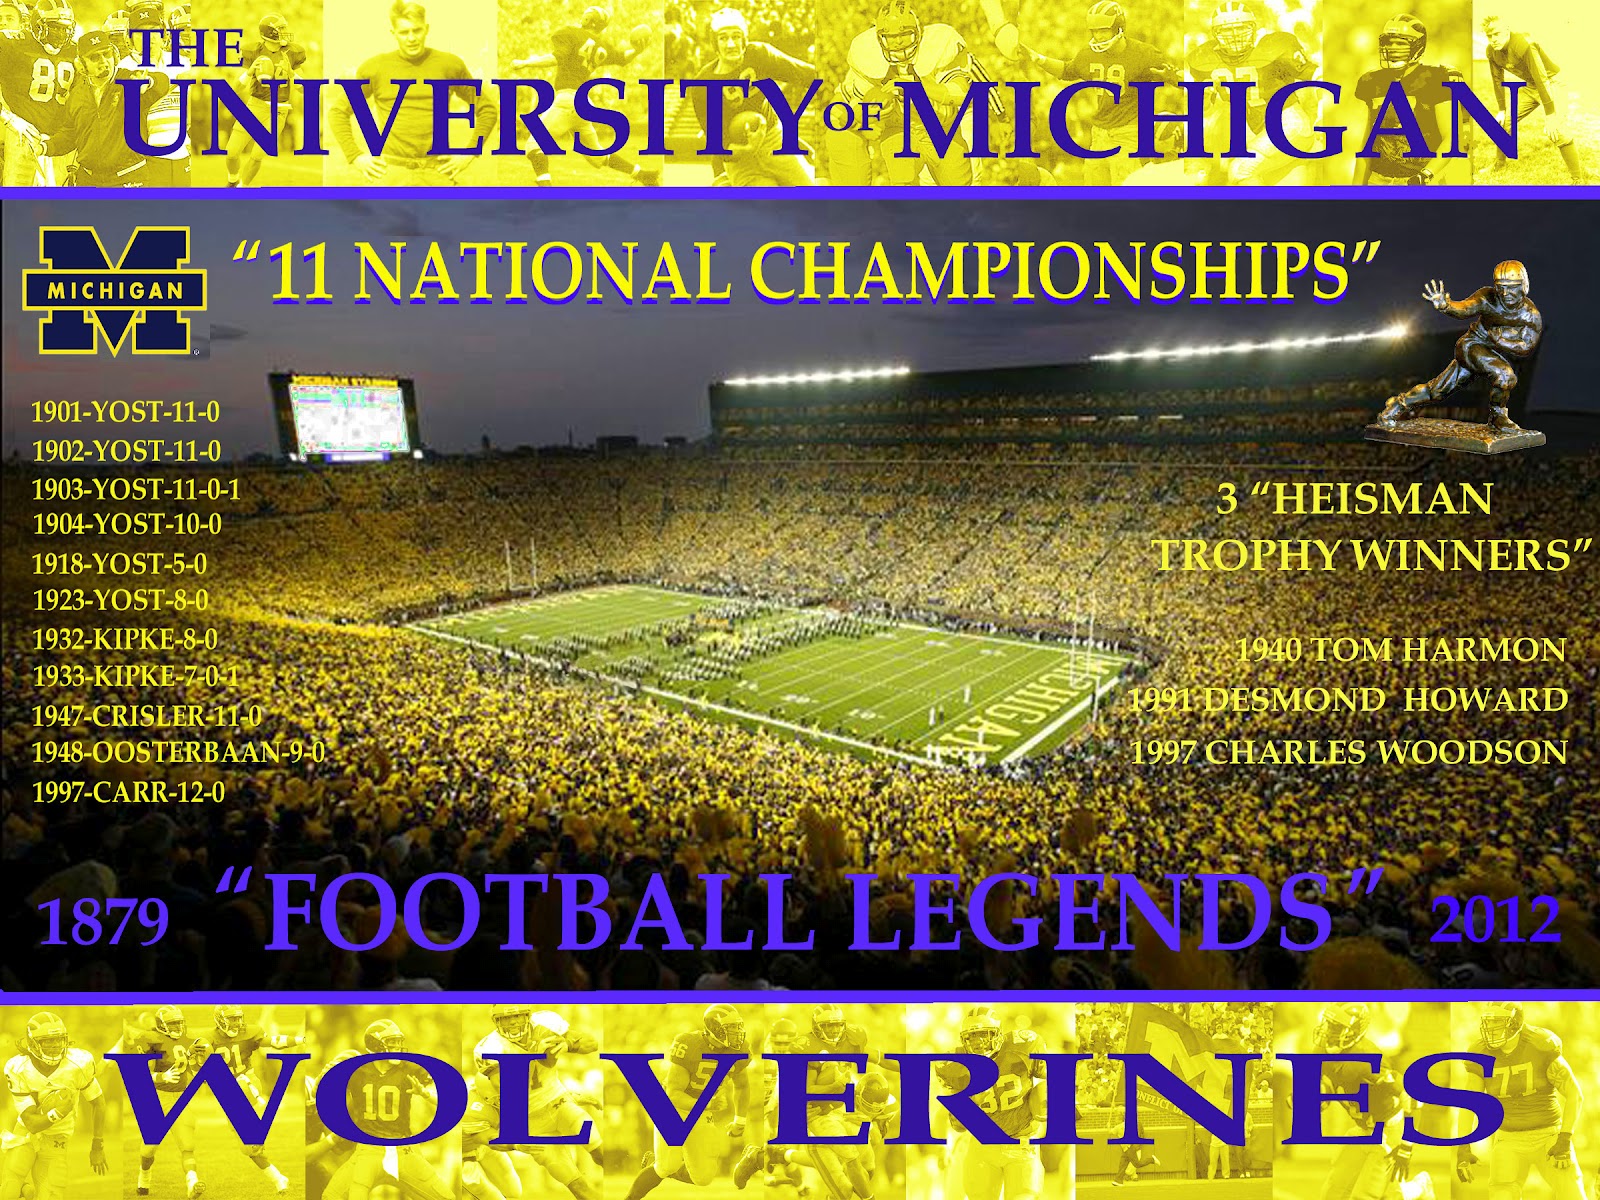 Michigan Wolverines Legends Poster